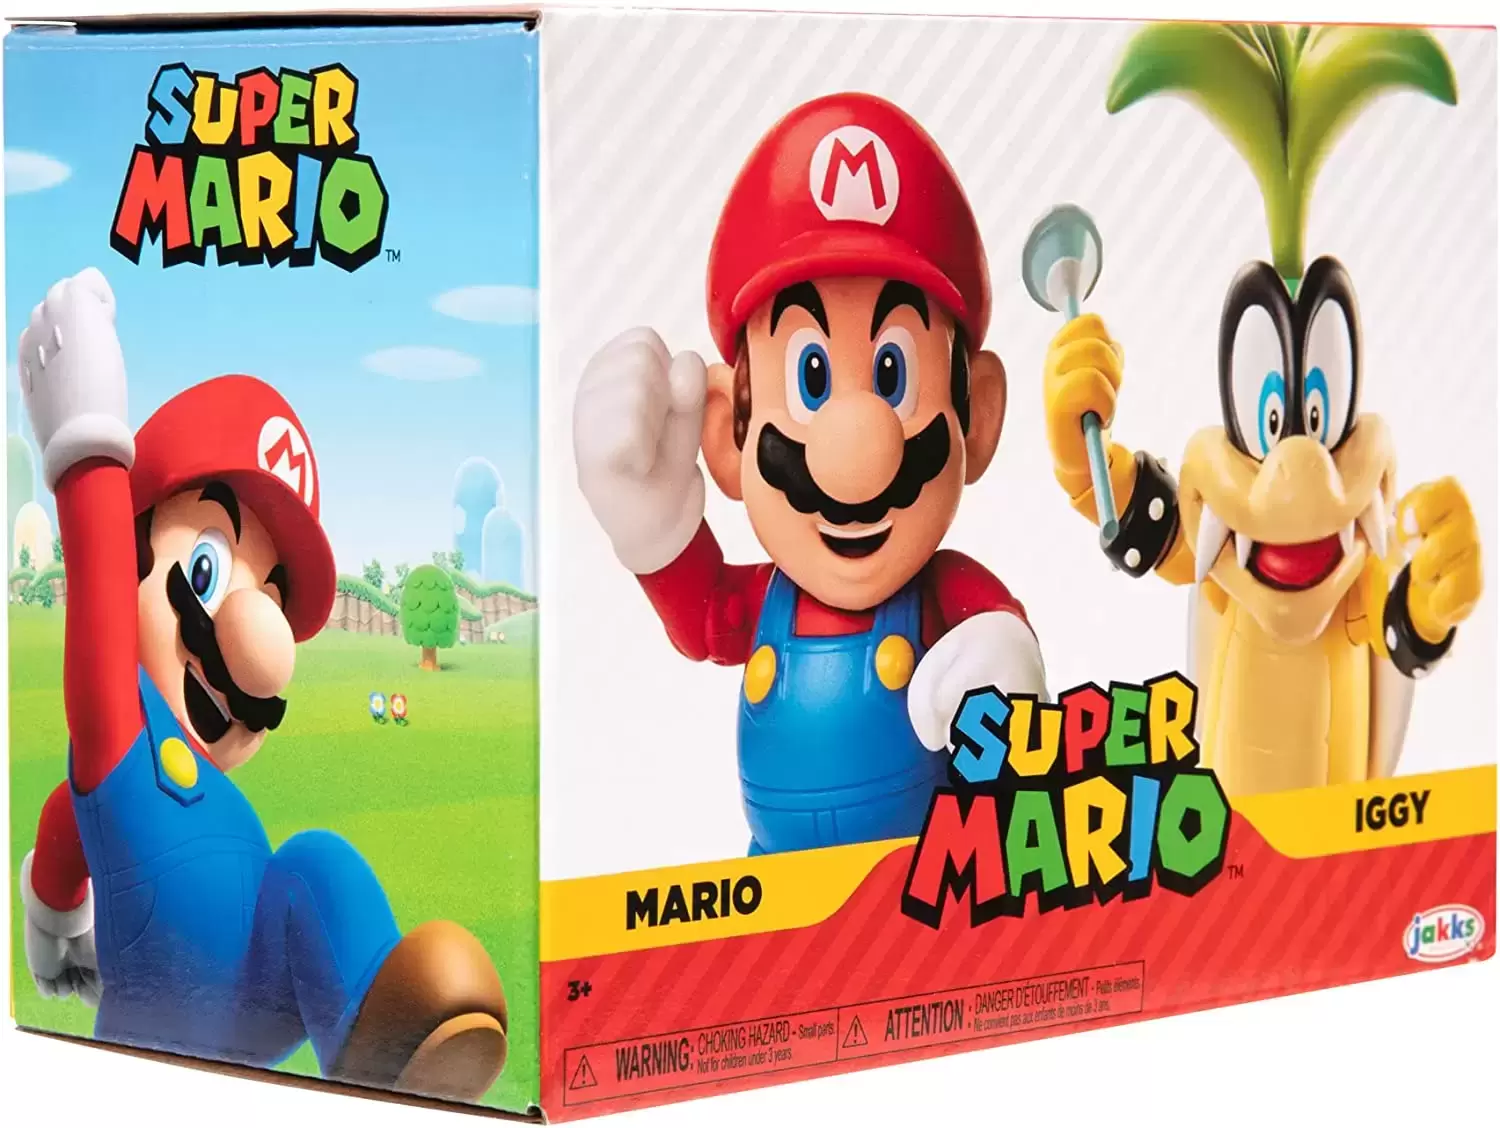 World of Nintendo - Mario & Iggy 2-pack